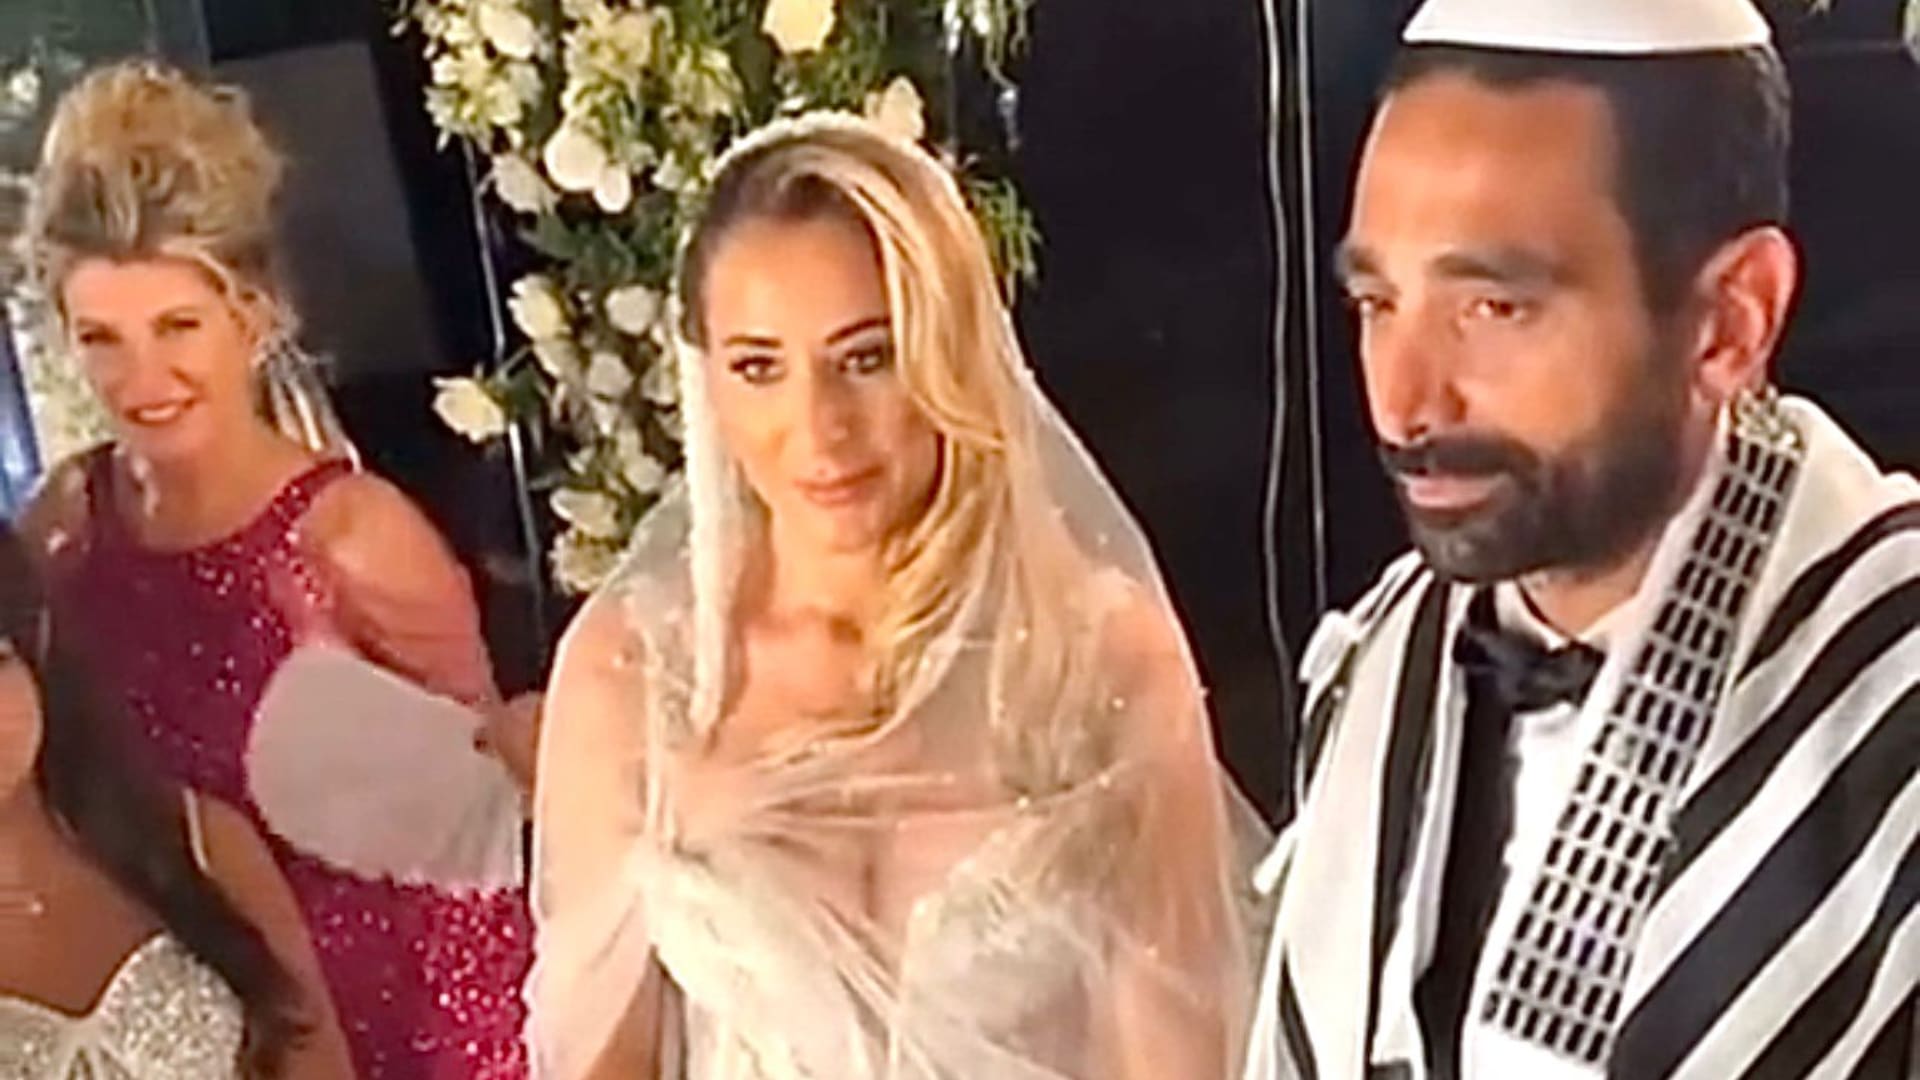 Magali Berdah mariée : Maeva Ghennam filme son union avec son compagnon Stéphane Teboul